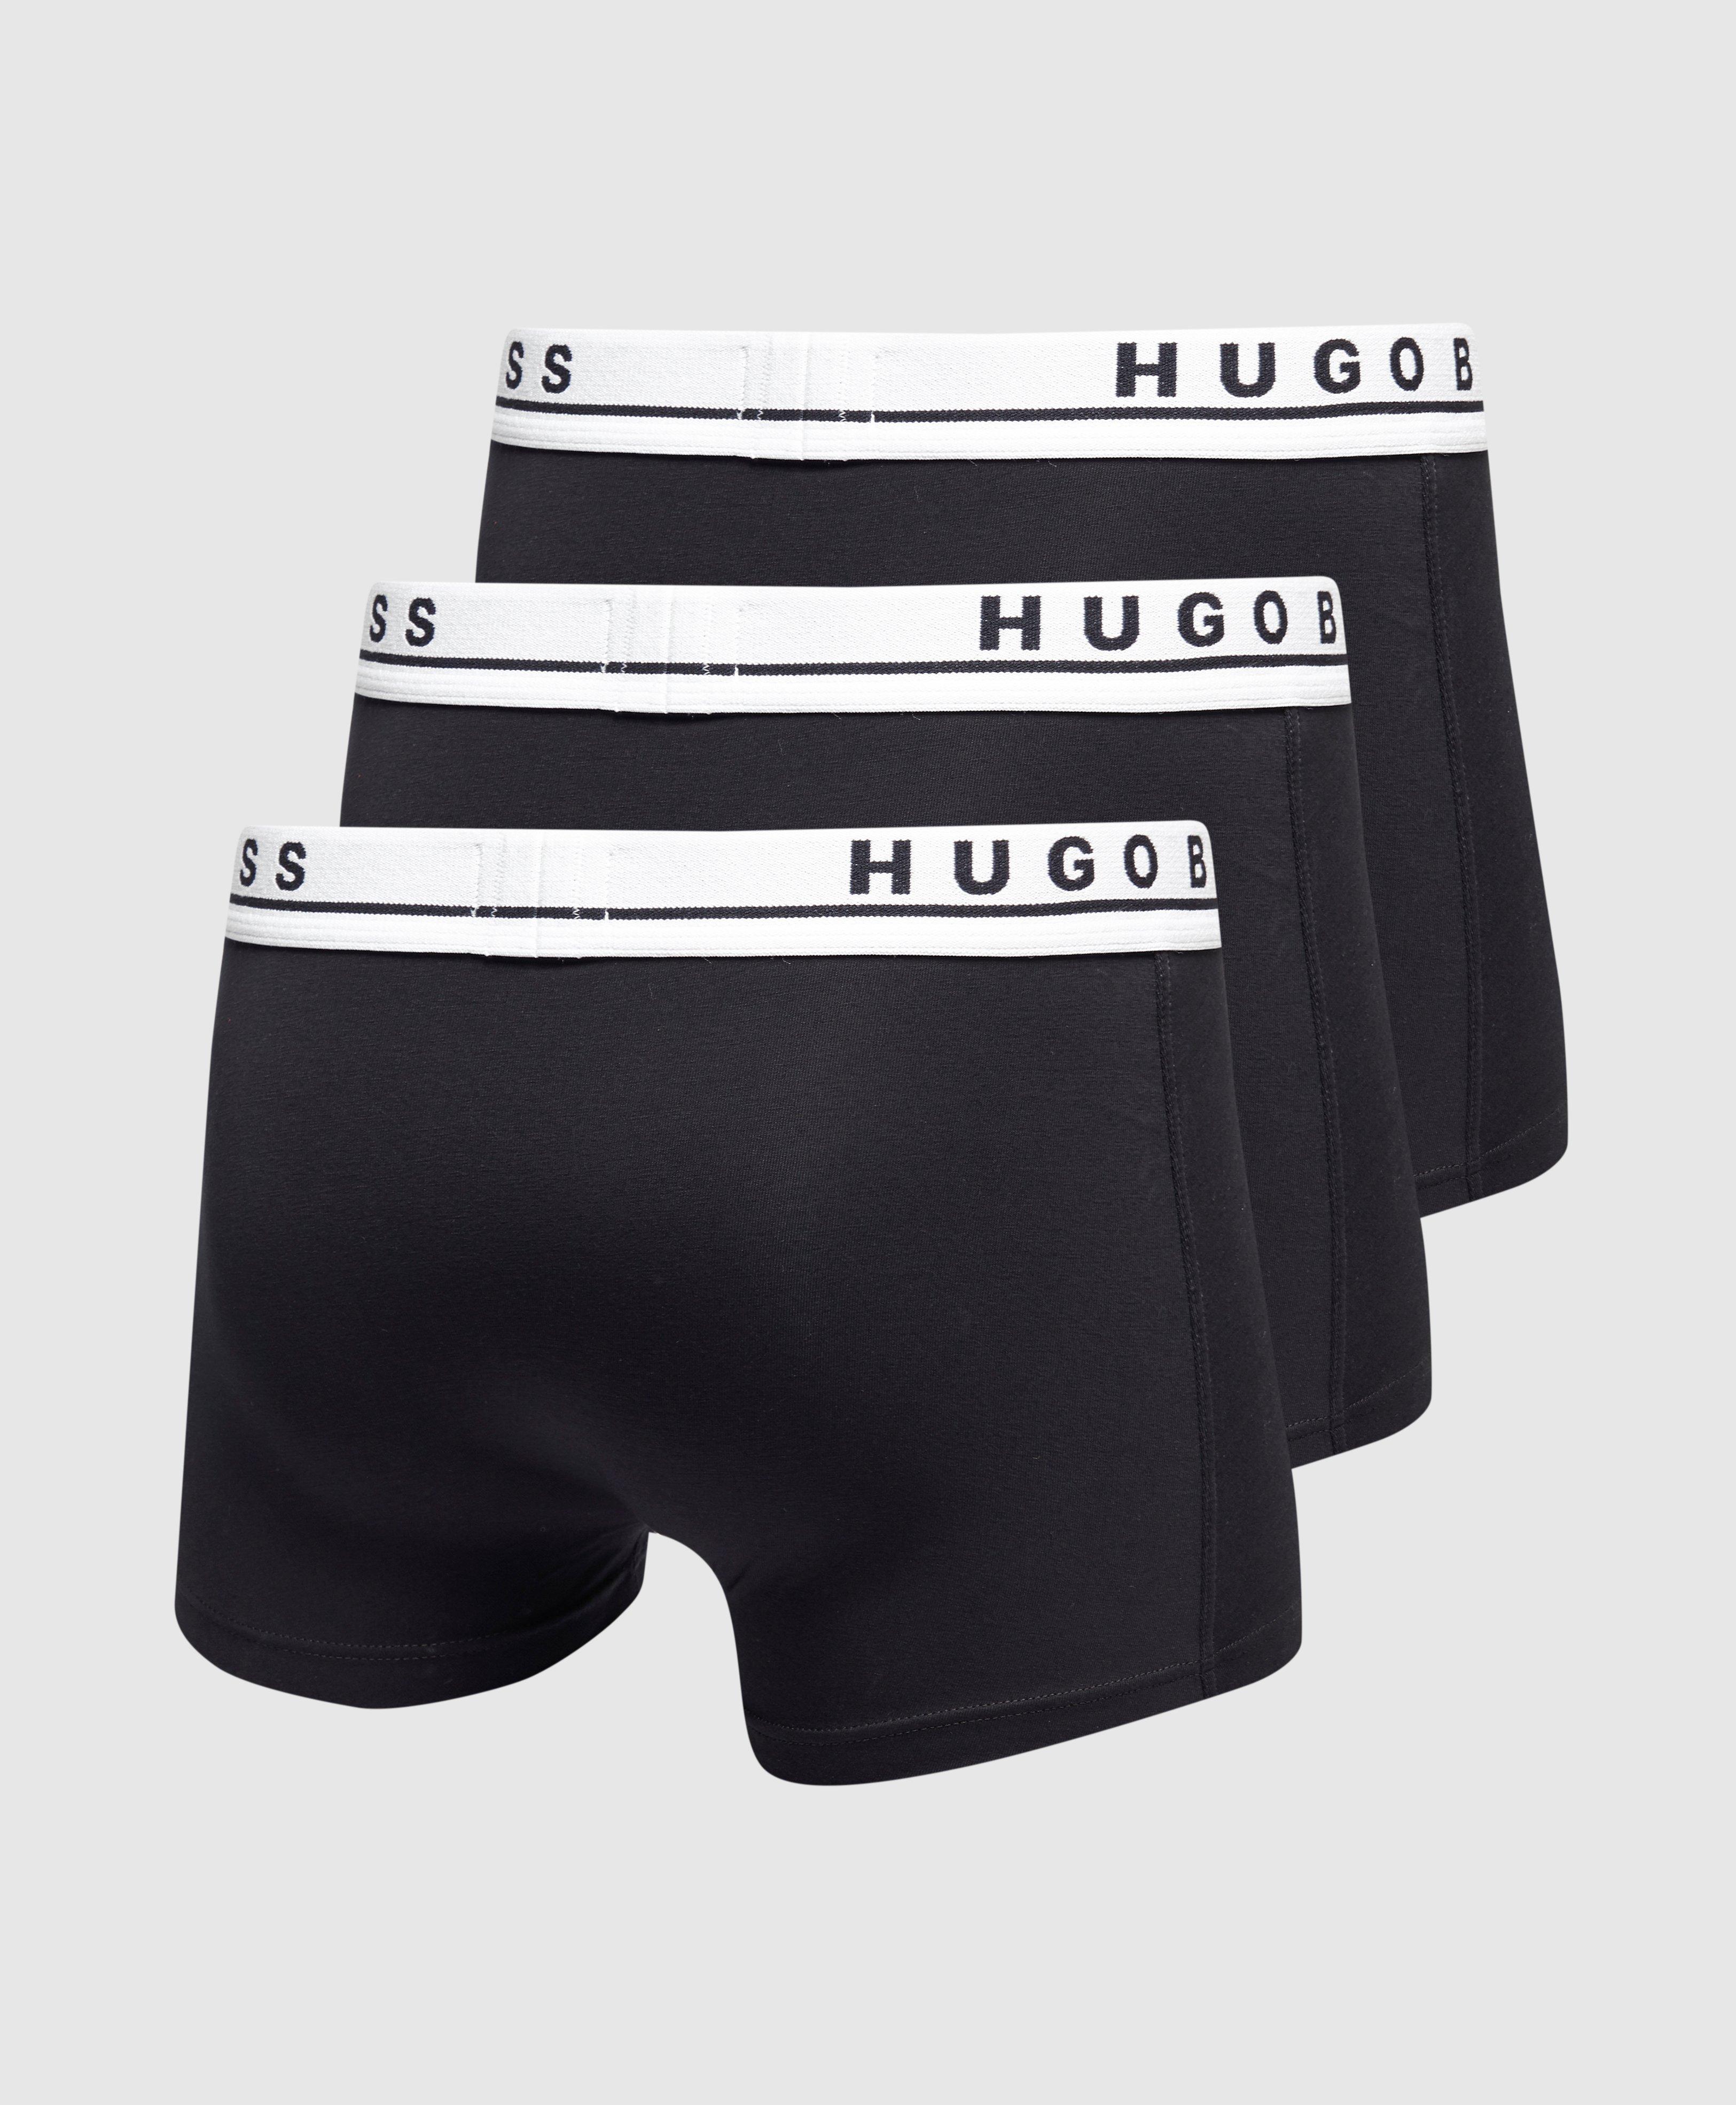 BOSS by Hugo Boss Cotton 3 Pack Boxer Shorts in Black (Blue) for Men - Lyst